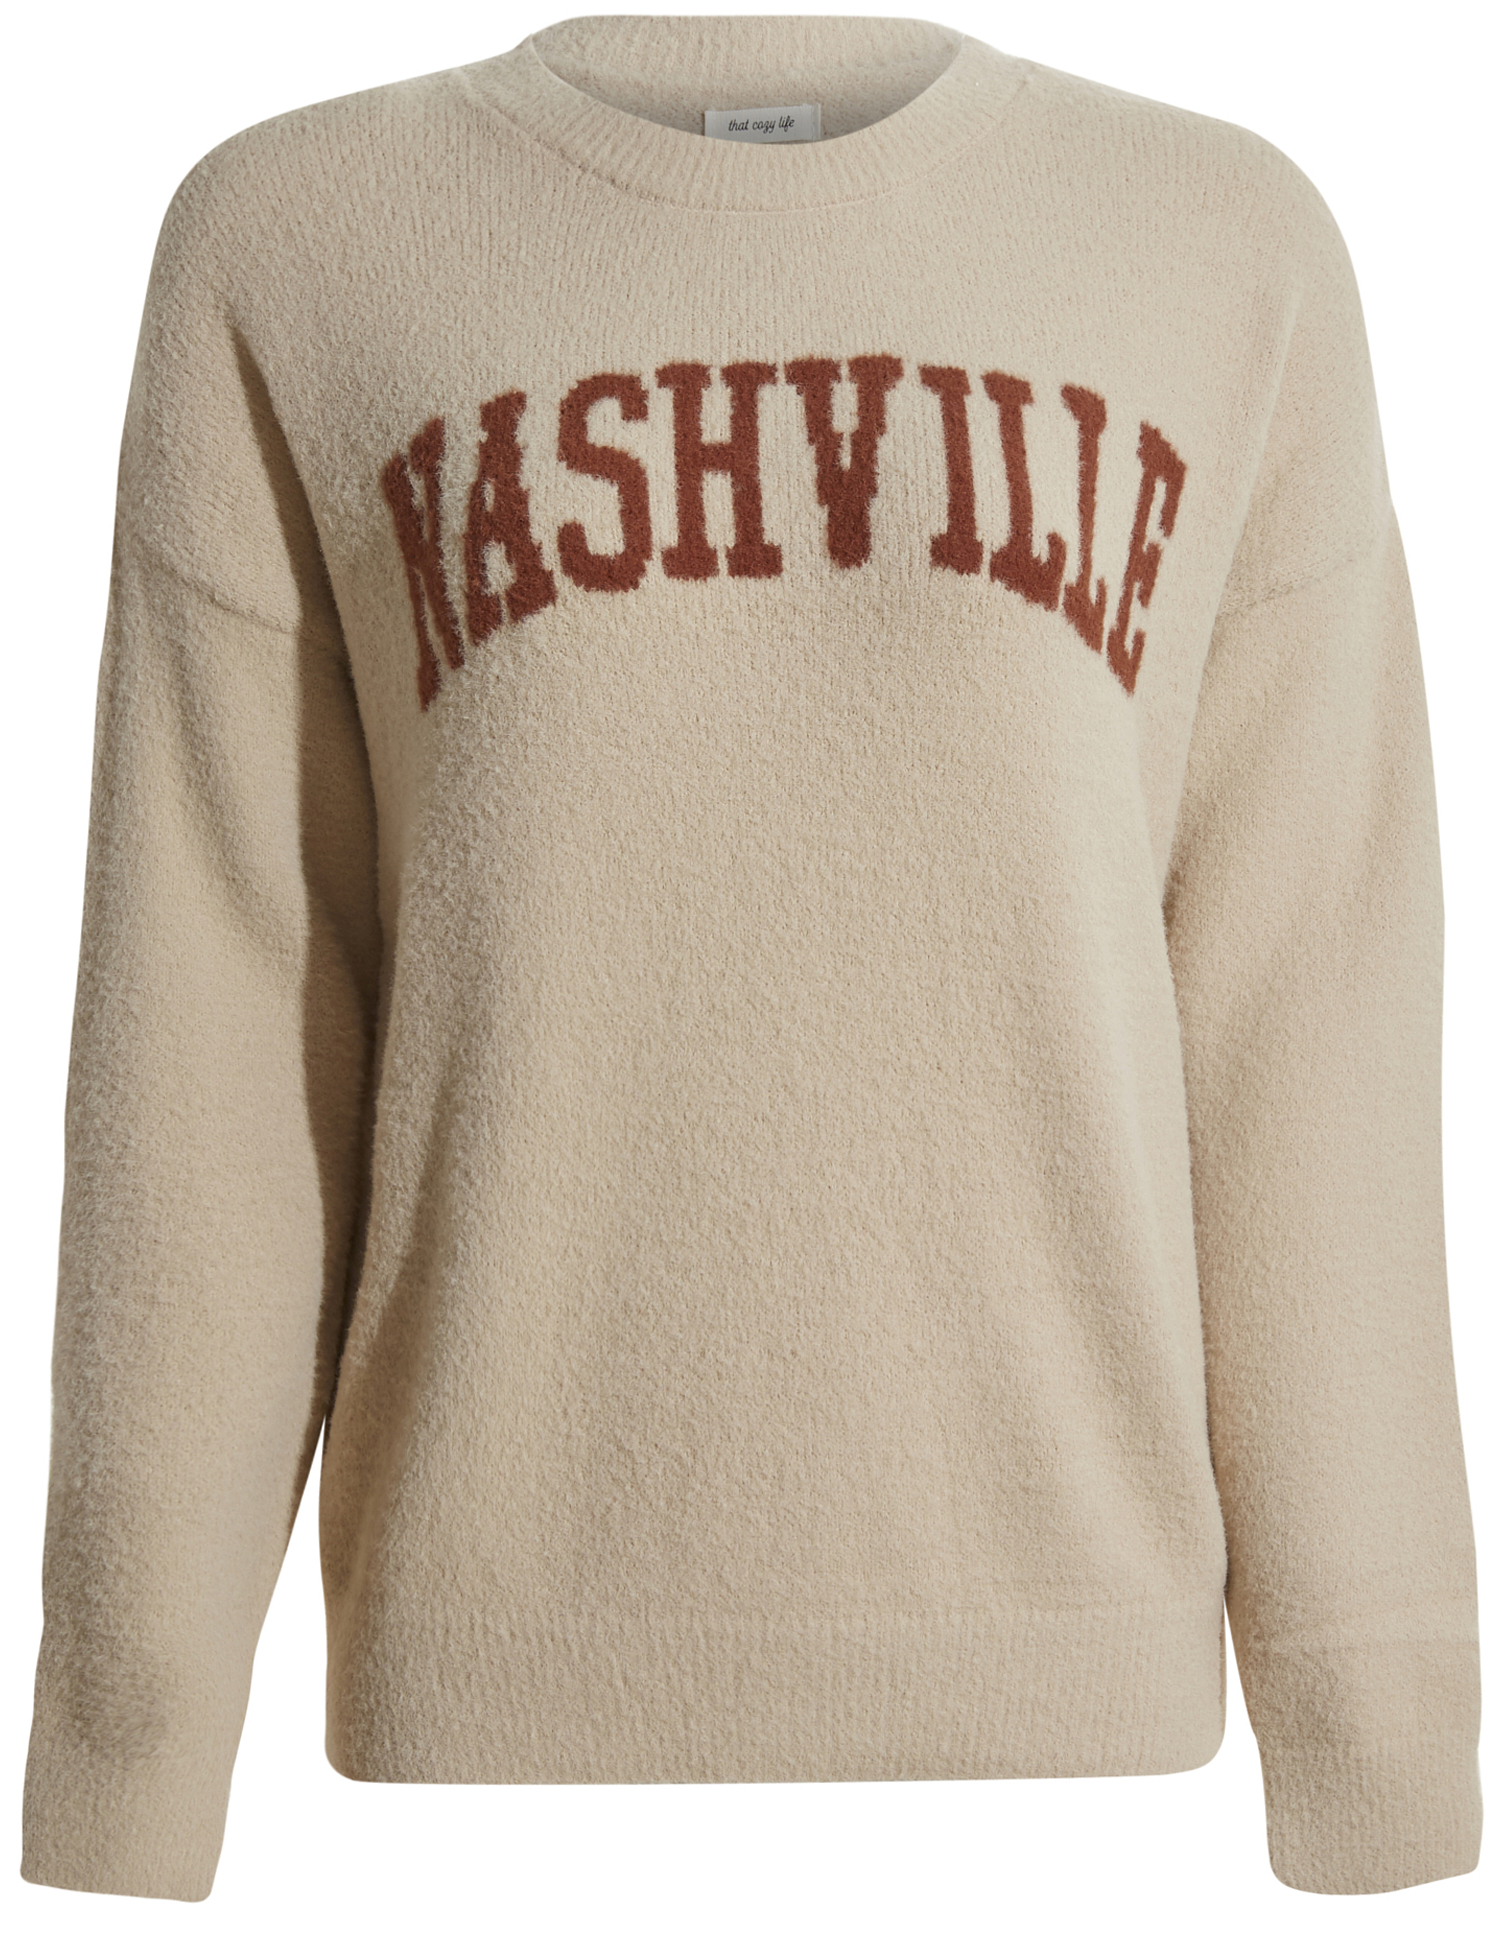 Thread & Supply Nashville Rib Knit Sweater